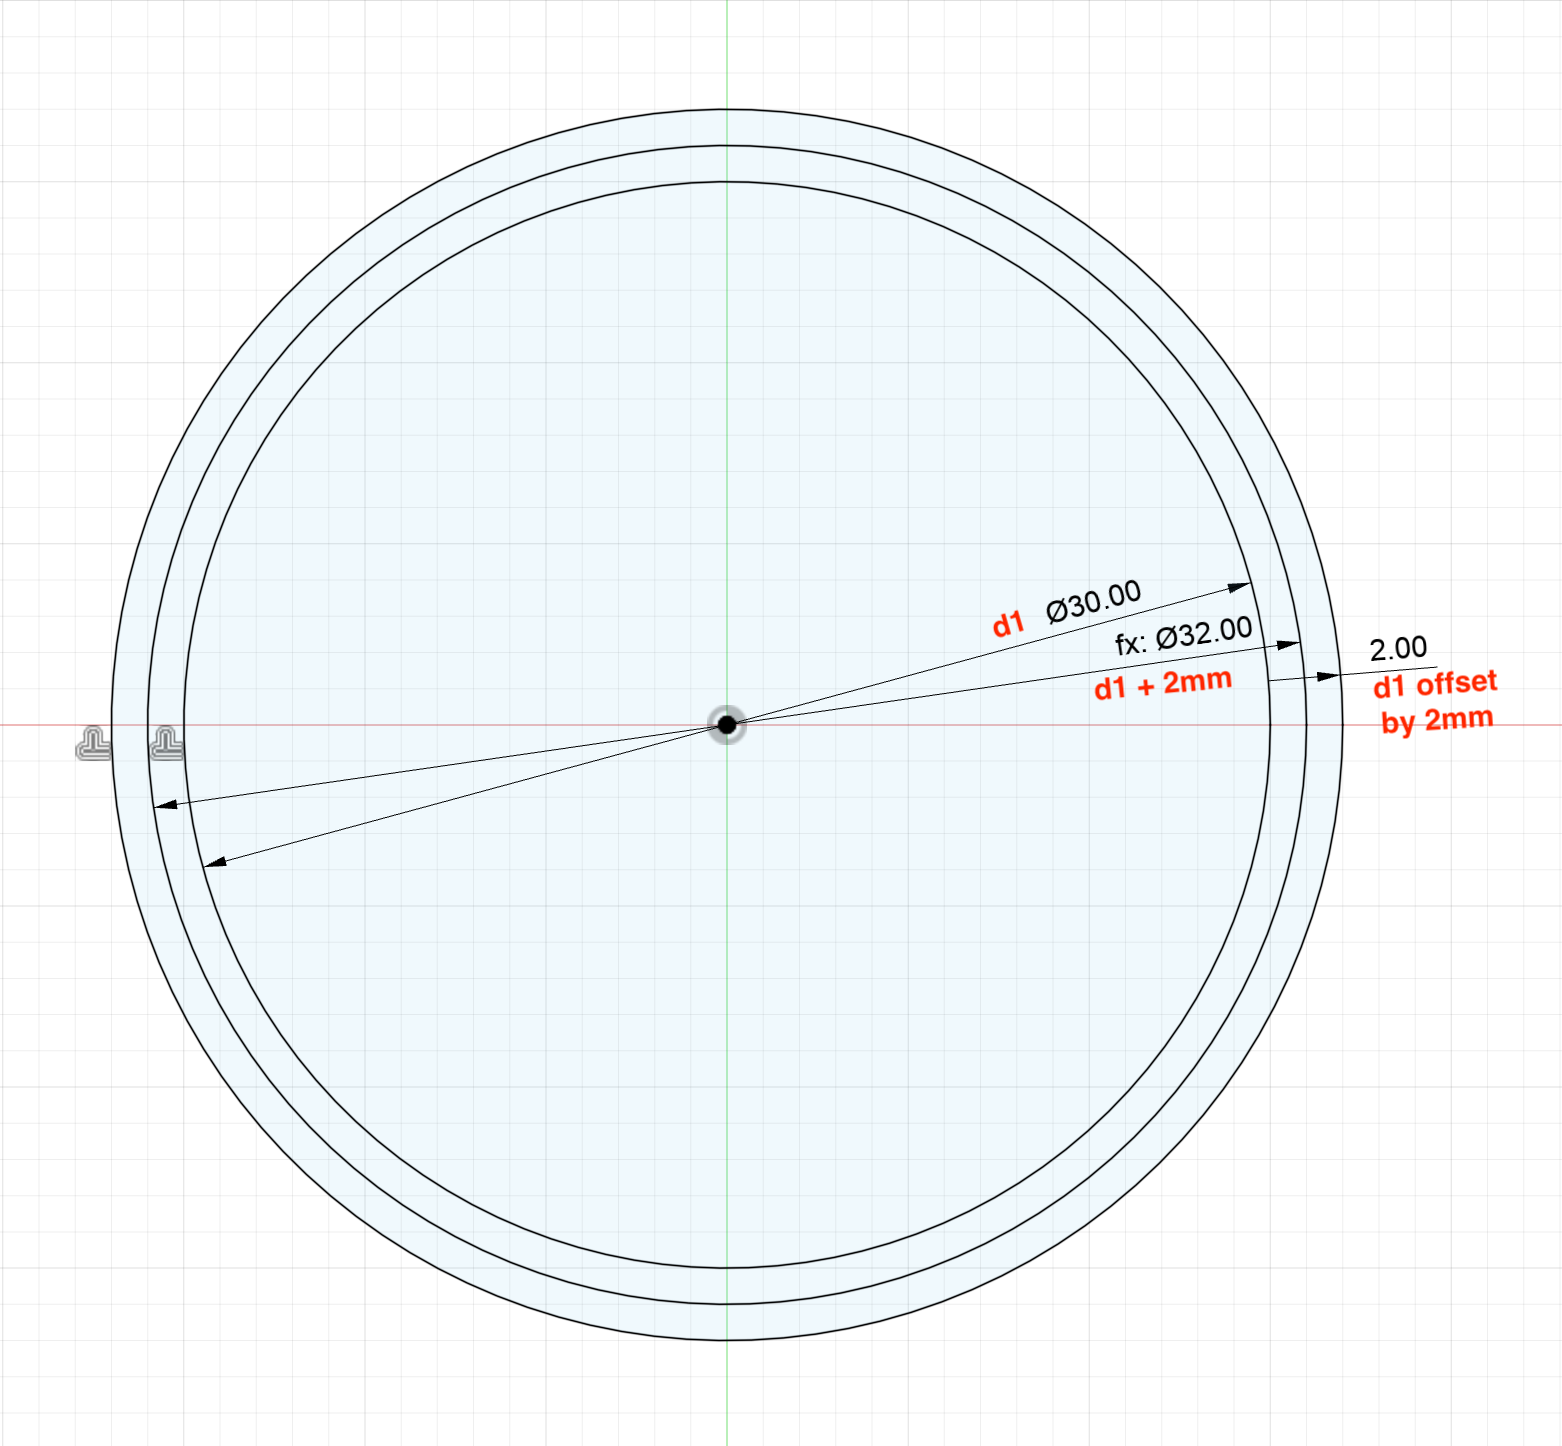 Autodesk Fusion sketch demonstrating offset vs. diameter adjustment